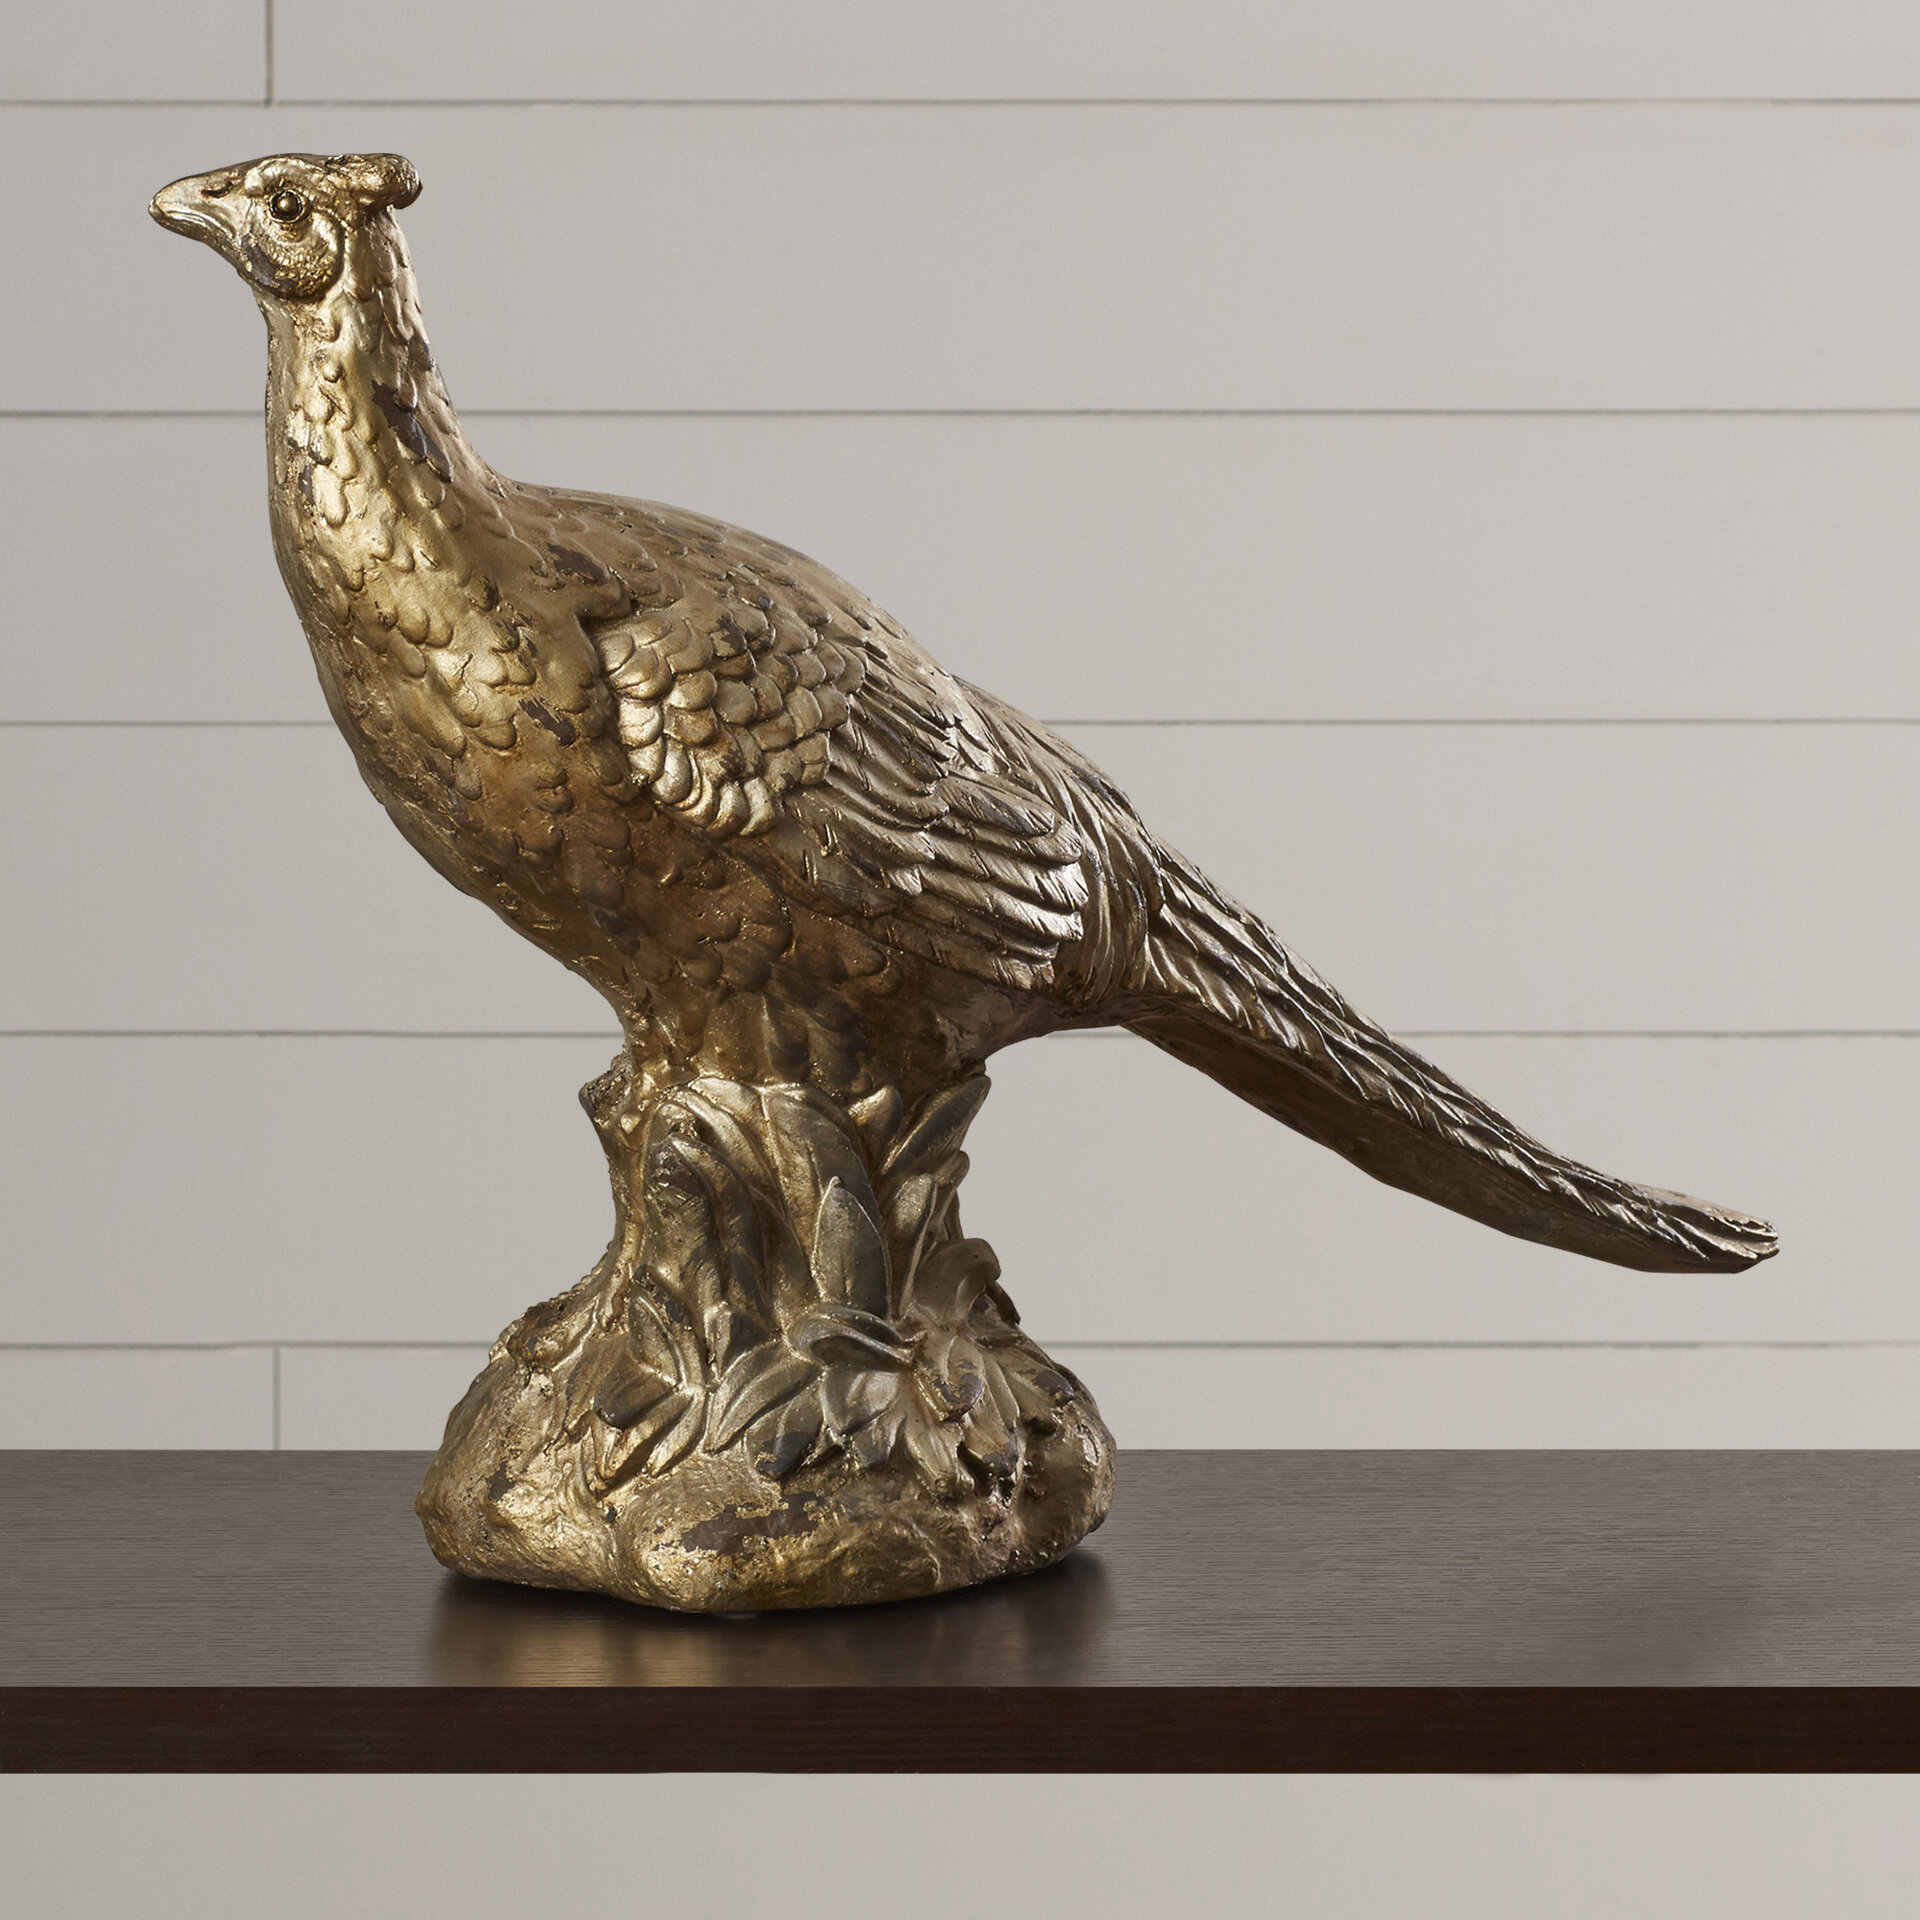 21 Rusty Metal Vintage Style Garden Pheasant Bird Ornament